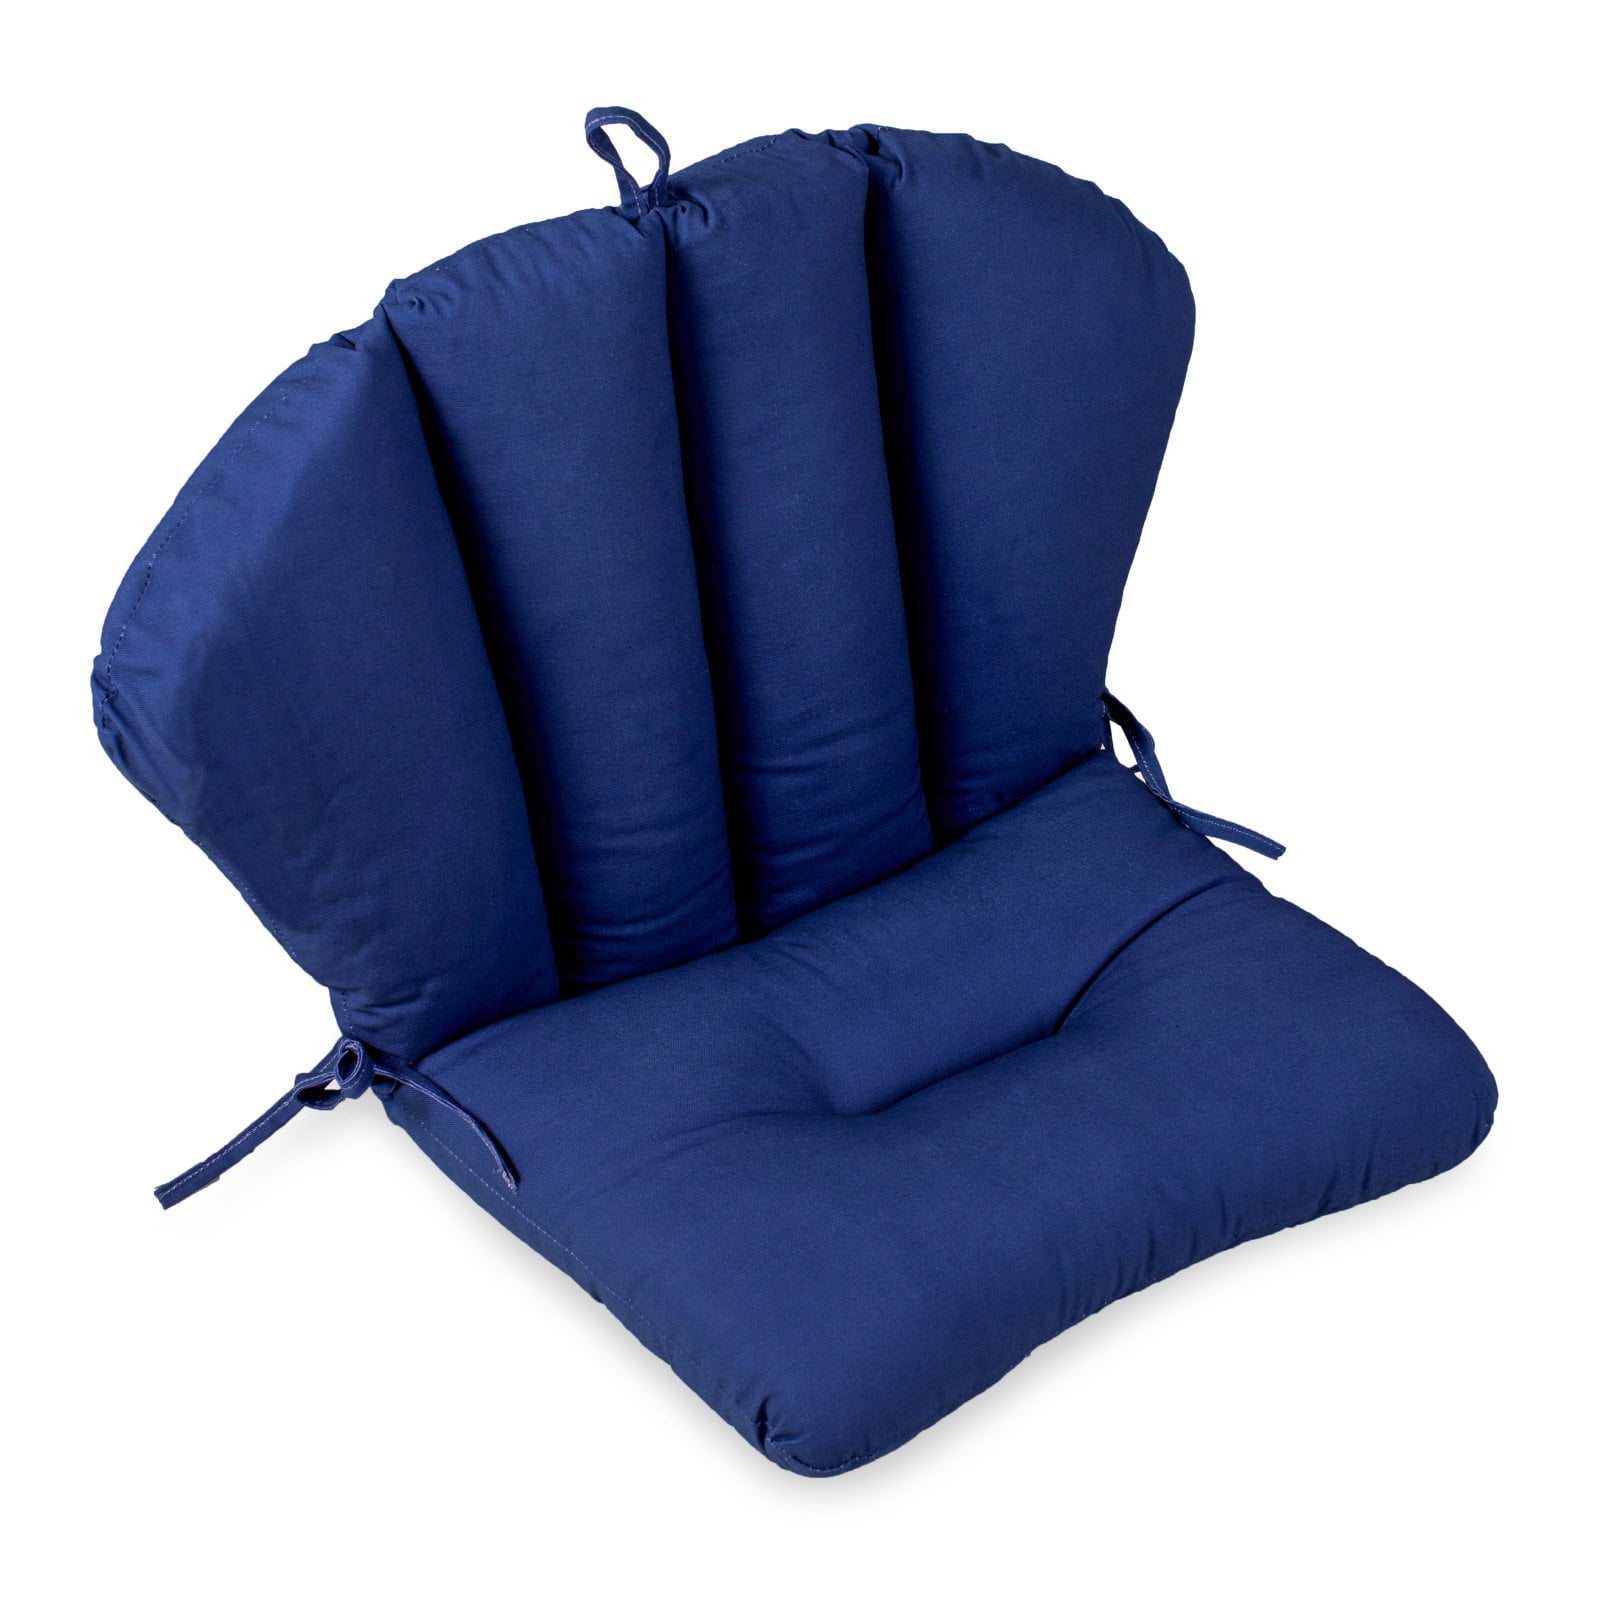 Wrought Iron Barrel Chair Cushions : Wrought iron seat pad 20 x 18 x 2.